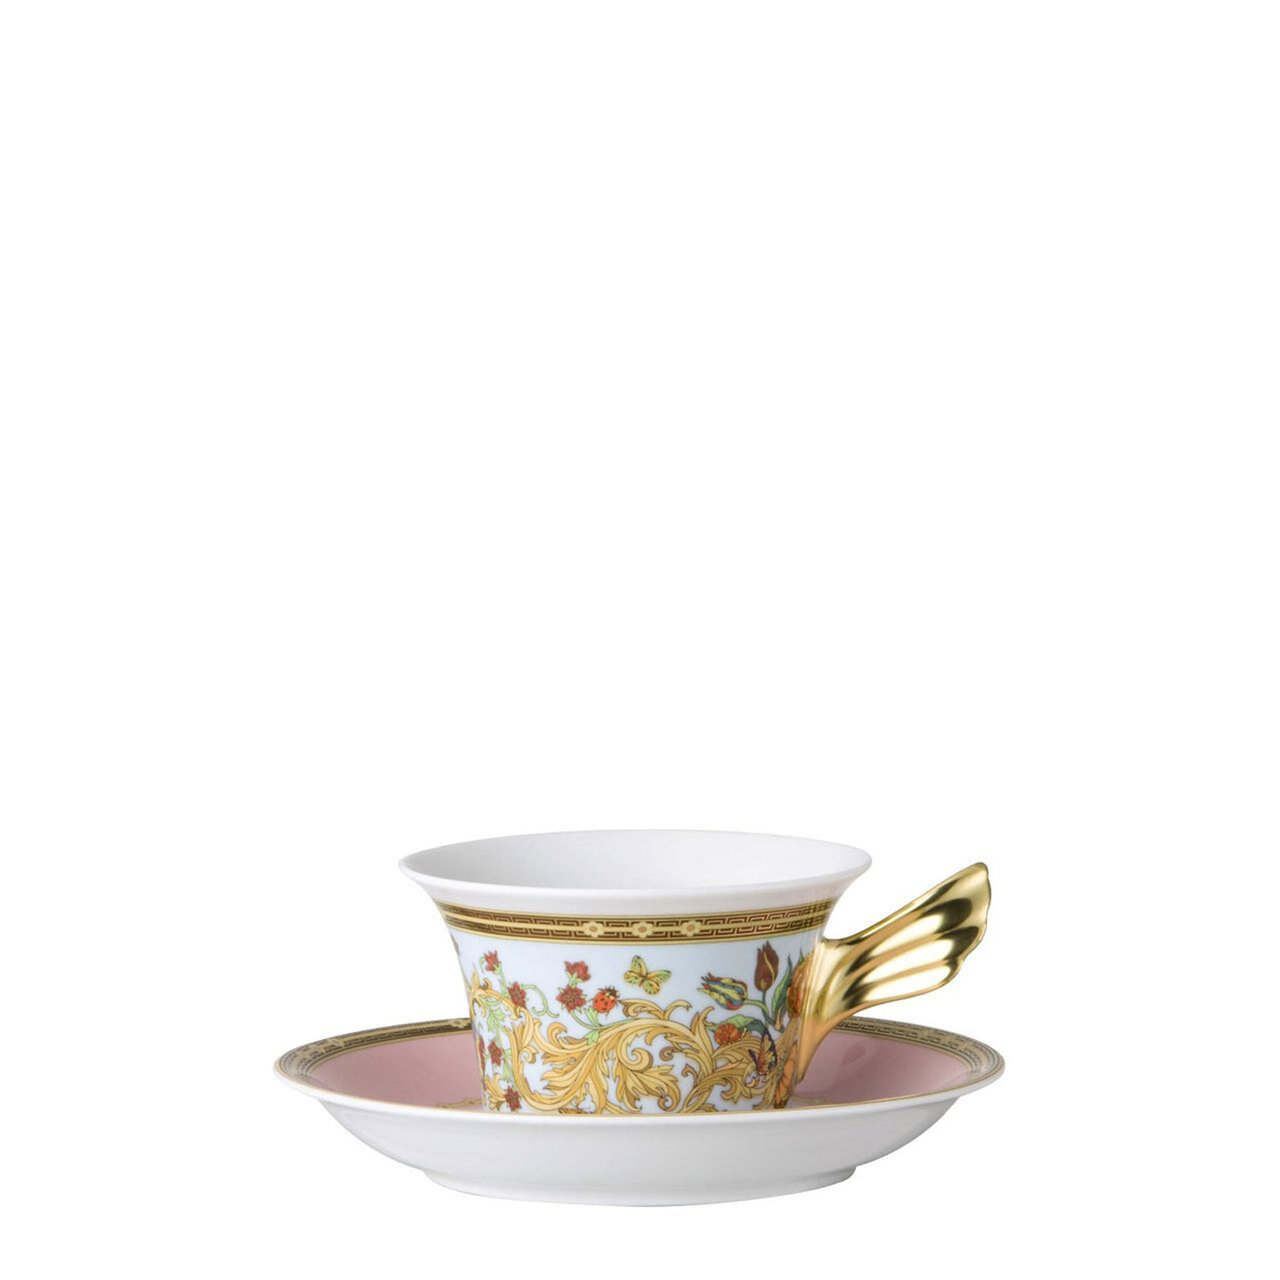 Versace Butterfly Garden Tea Cup and Saucer 6 1/4 Inch 7 oz.